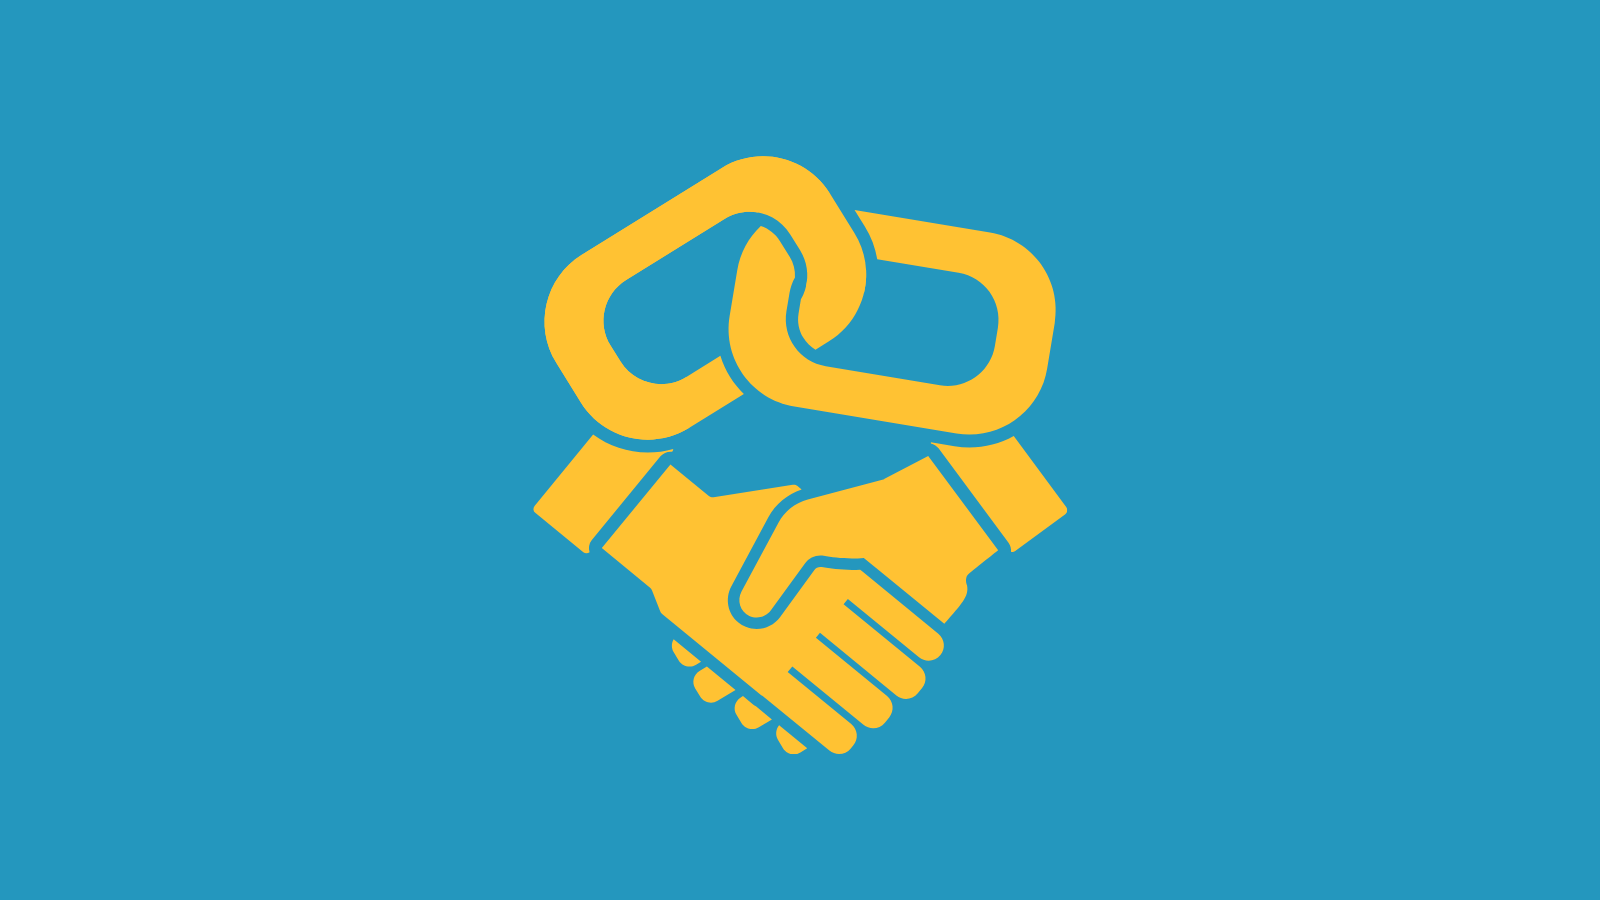 A link symbol above a handshake